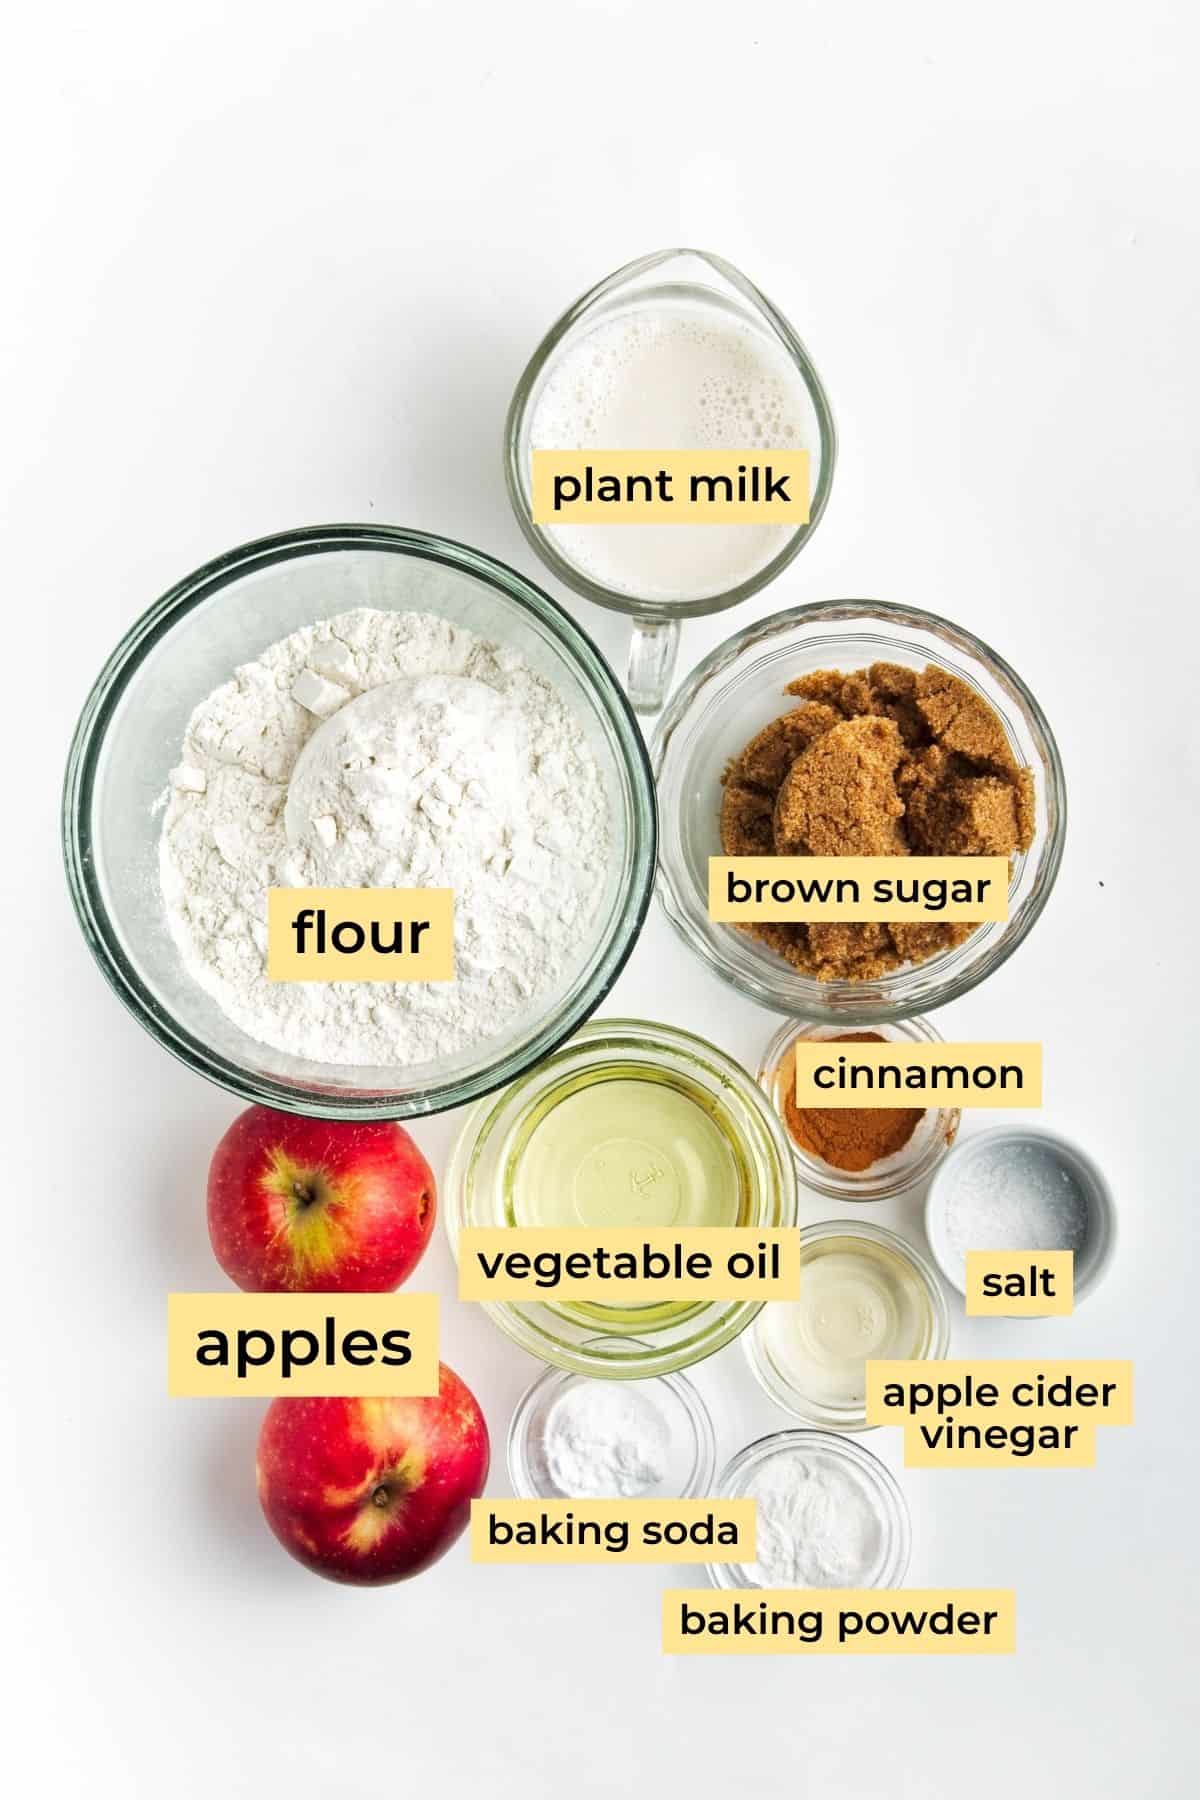 Ingredients for vegan apple muffins: All-purpose flour, brown sugar, apples, plant milk, vegetable oil, cinnamon, baking powder, baking soda, apple cider vinegar, and salt.